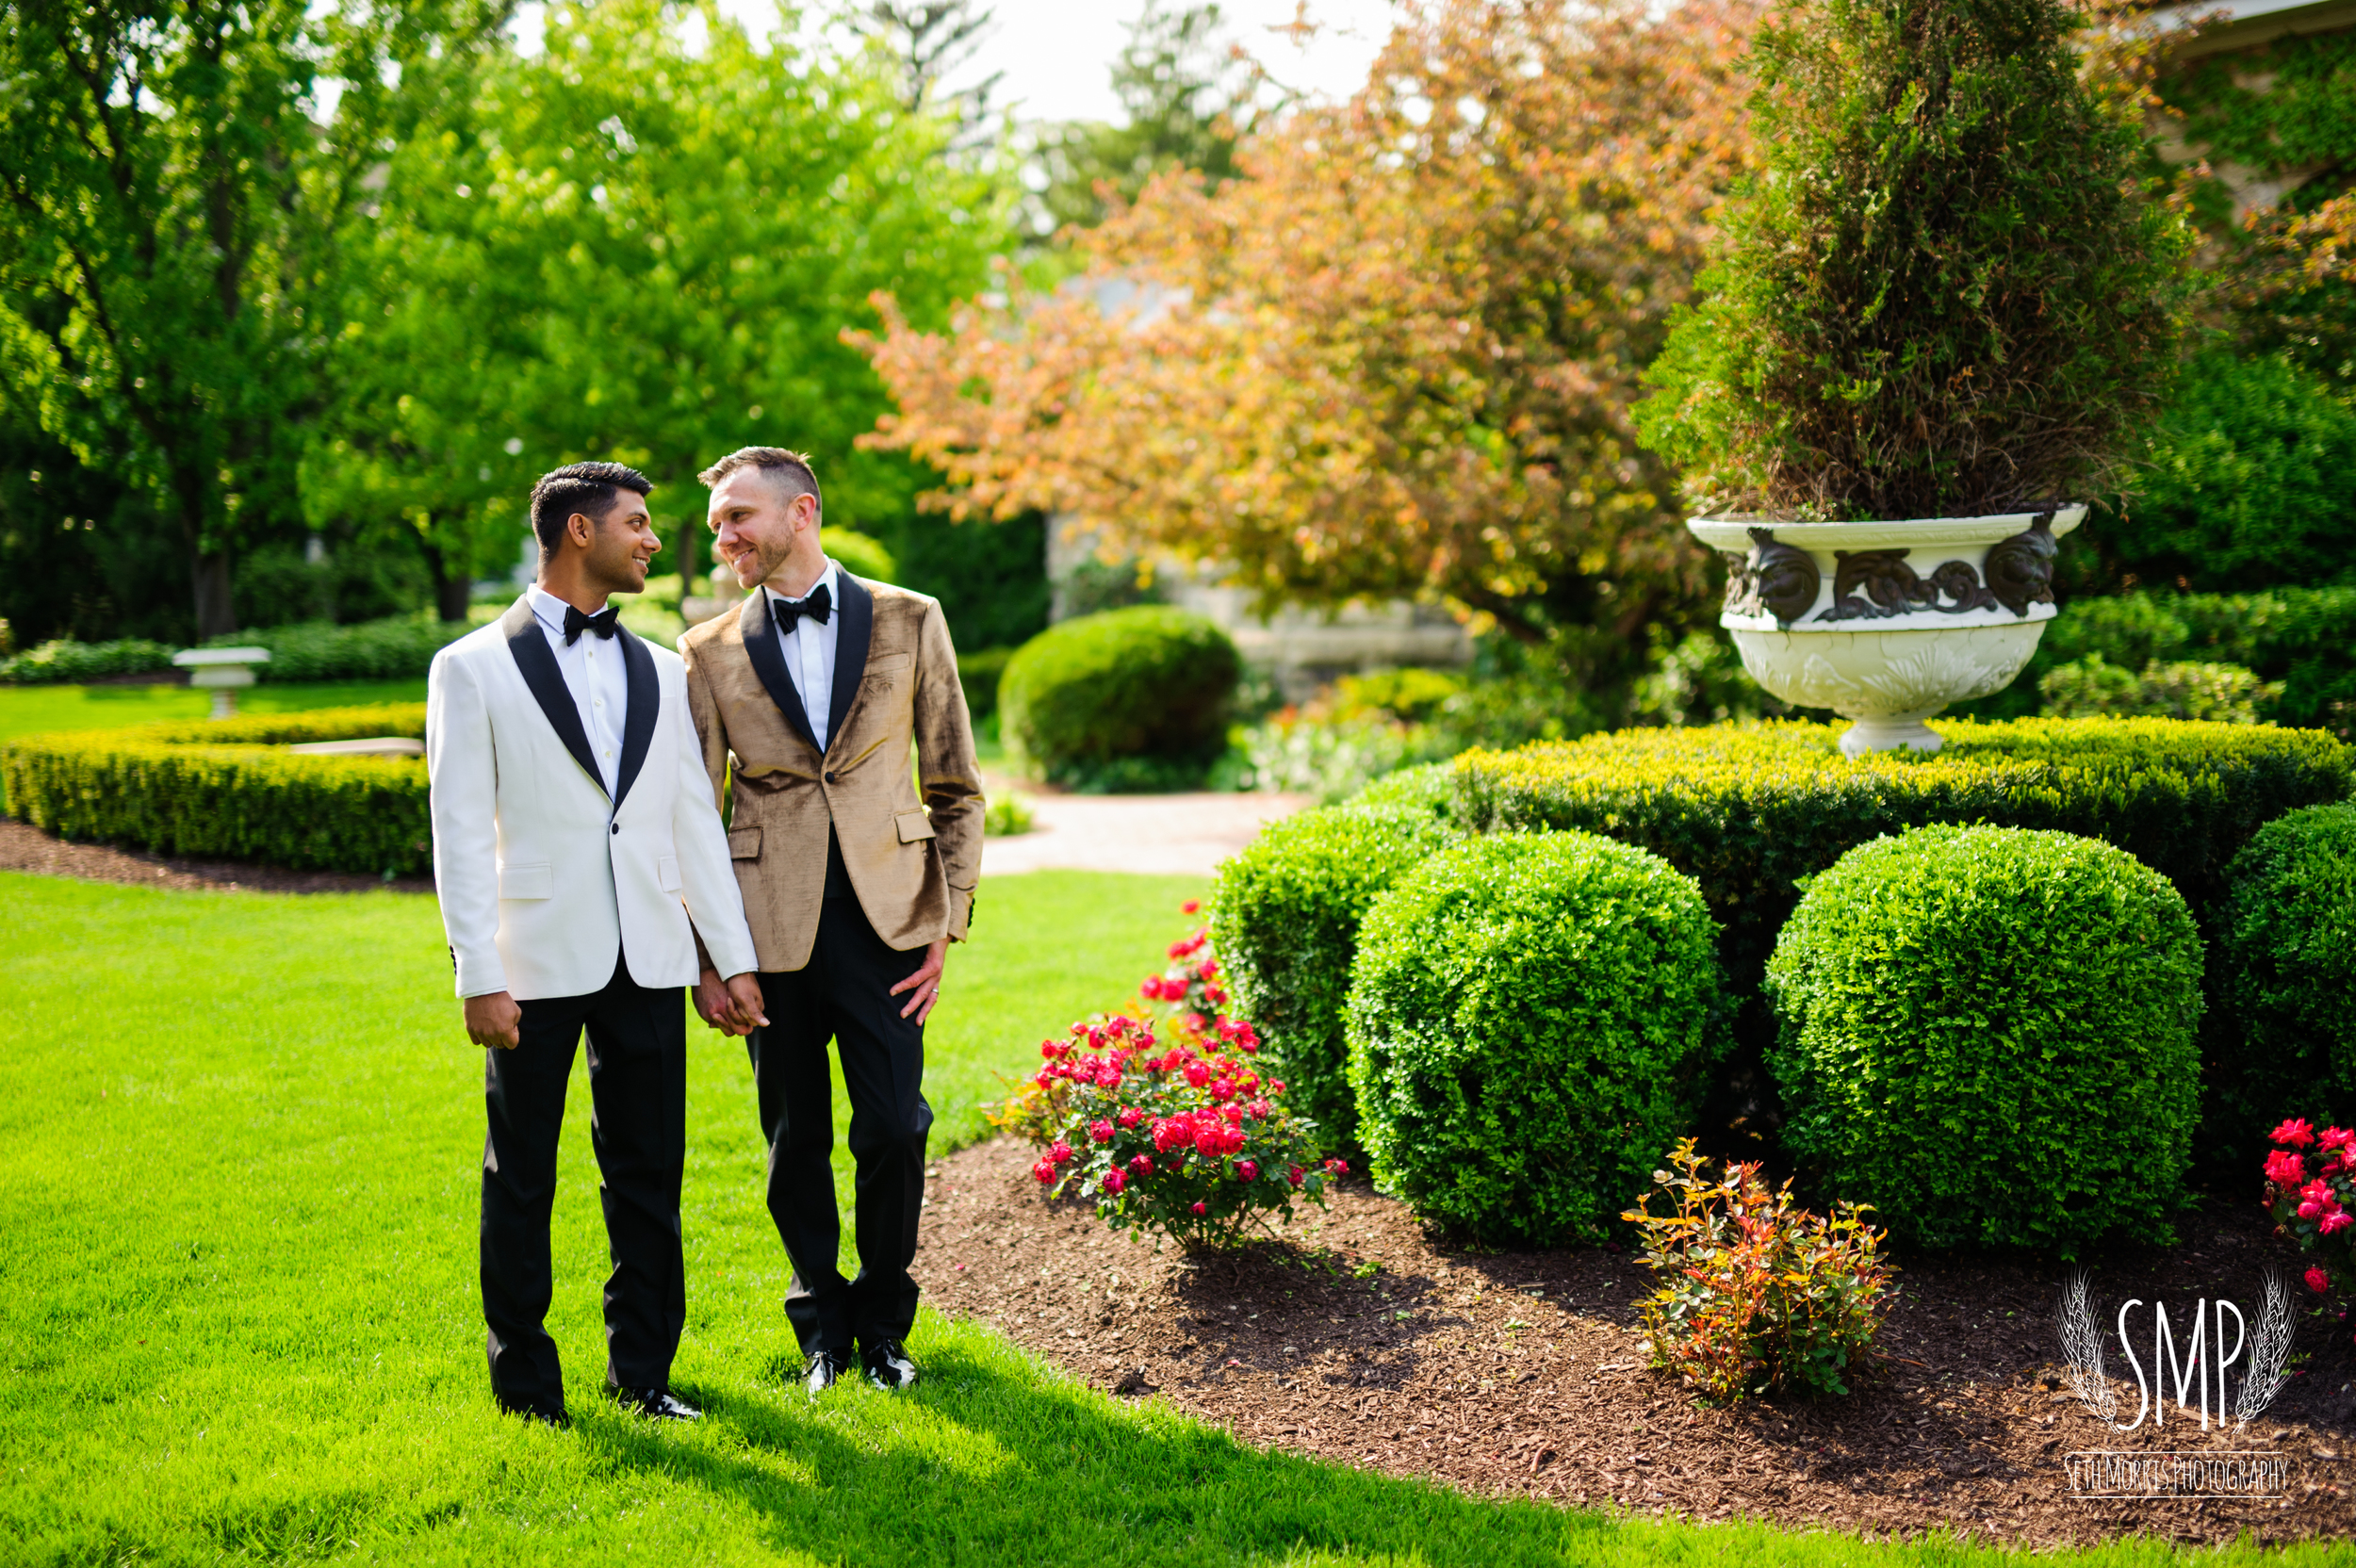 same-sex-wedding-photographer-chicago-illinois-44.jpg